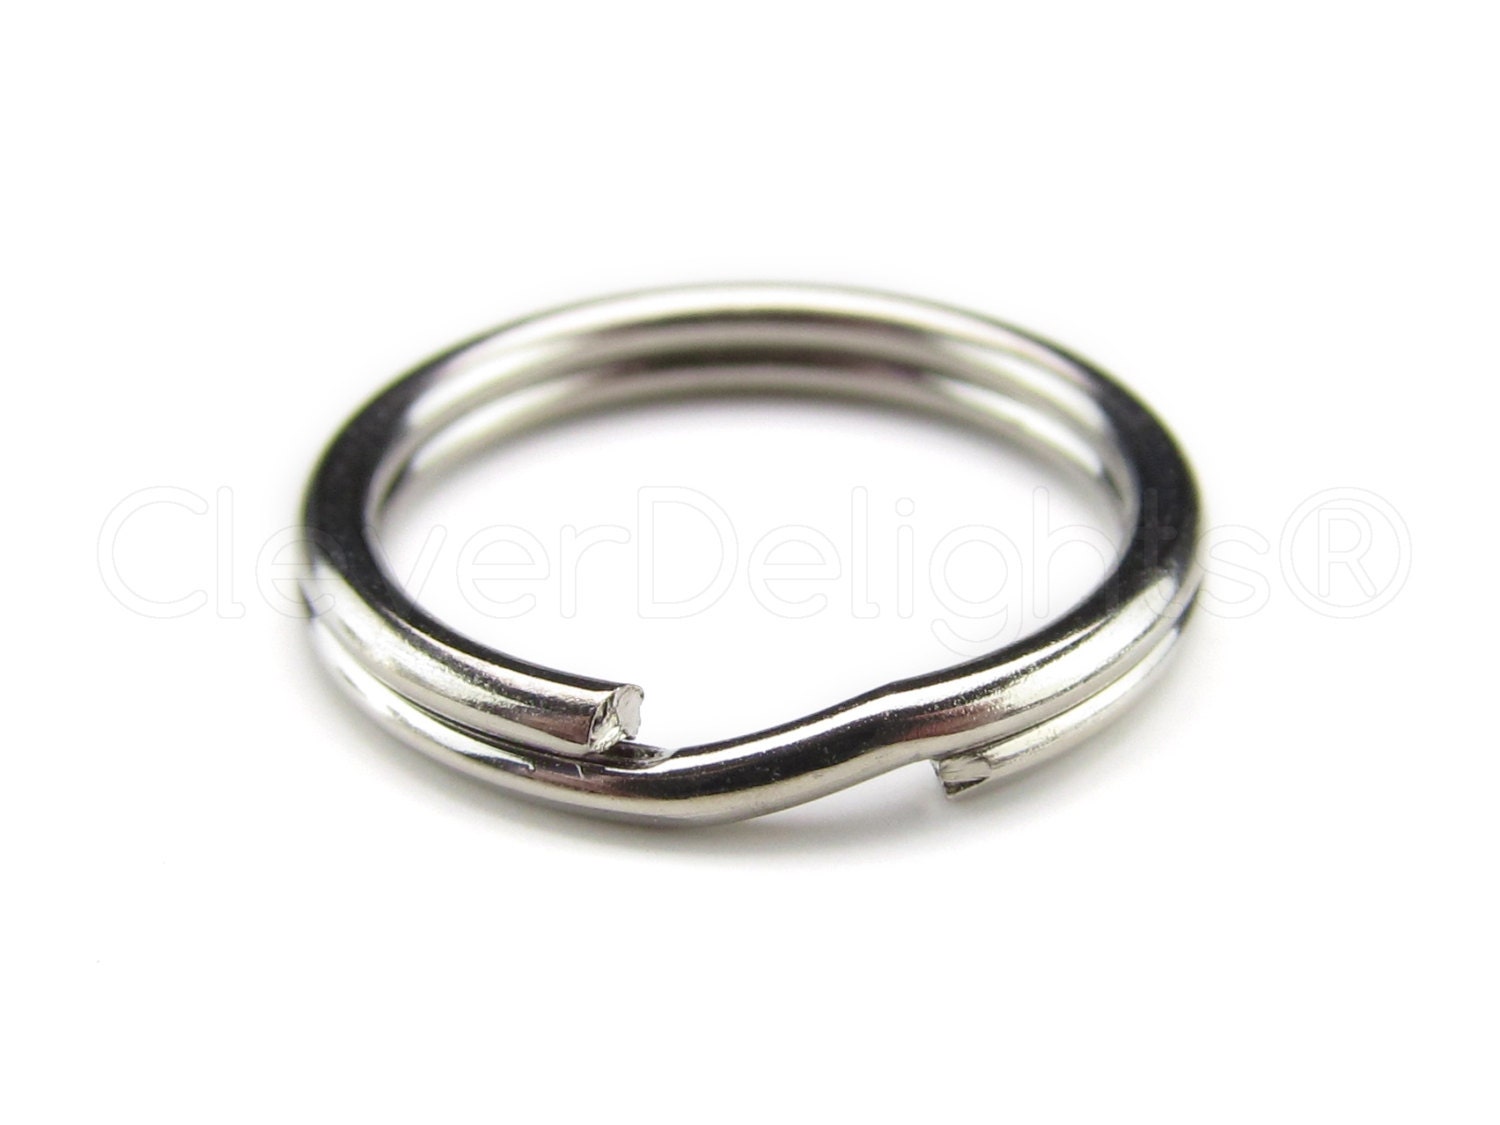 25 Pack - 1 Key Rings - Dark Black Color - 25mm Split Key Ring - Strong  Key Chain Key Fob Ring - 1 Inch 25 mm - USA Seller